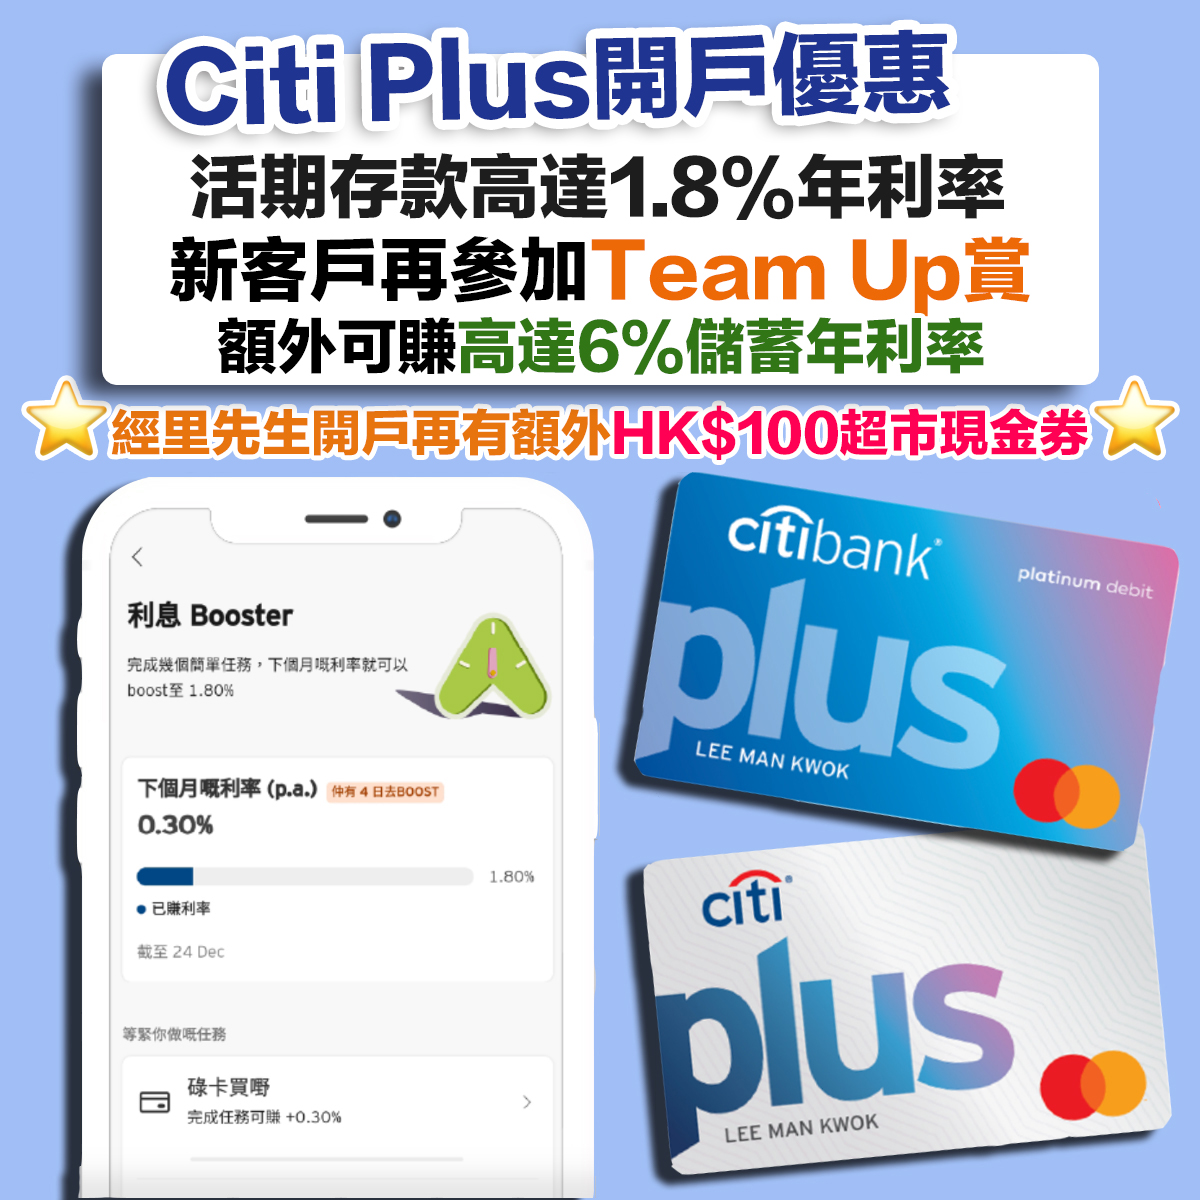 【Citi開戶】Citi Priority將被Citi Plus取代？新戶口活期存款優惠仲有高達1.8%年利率！仲有額外HK$100超市現金券